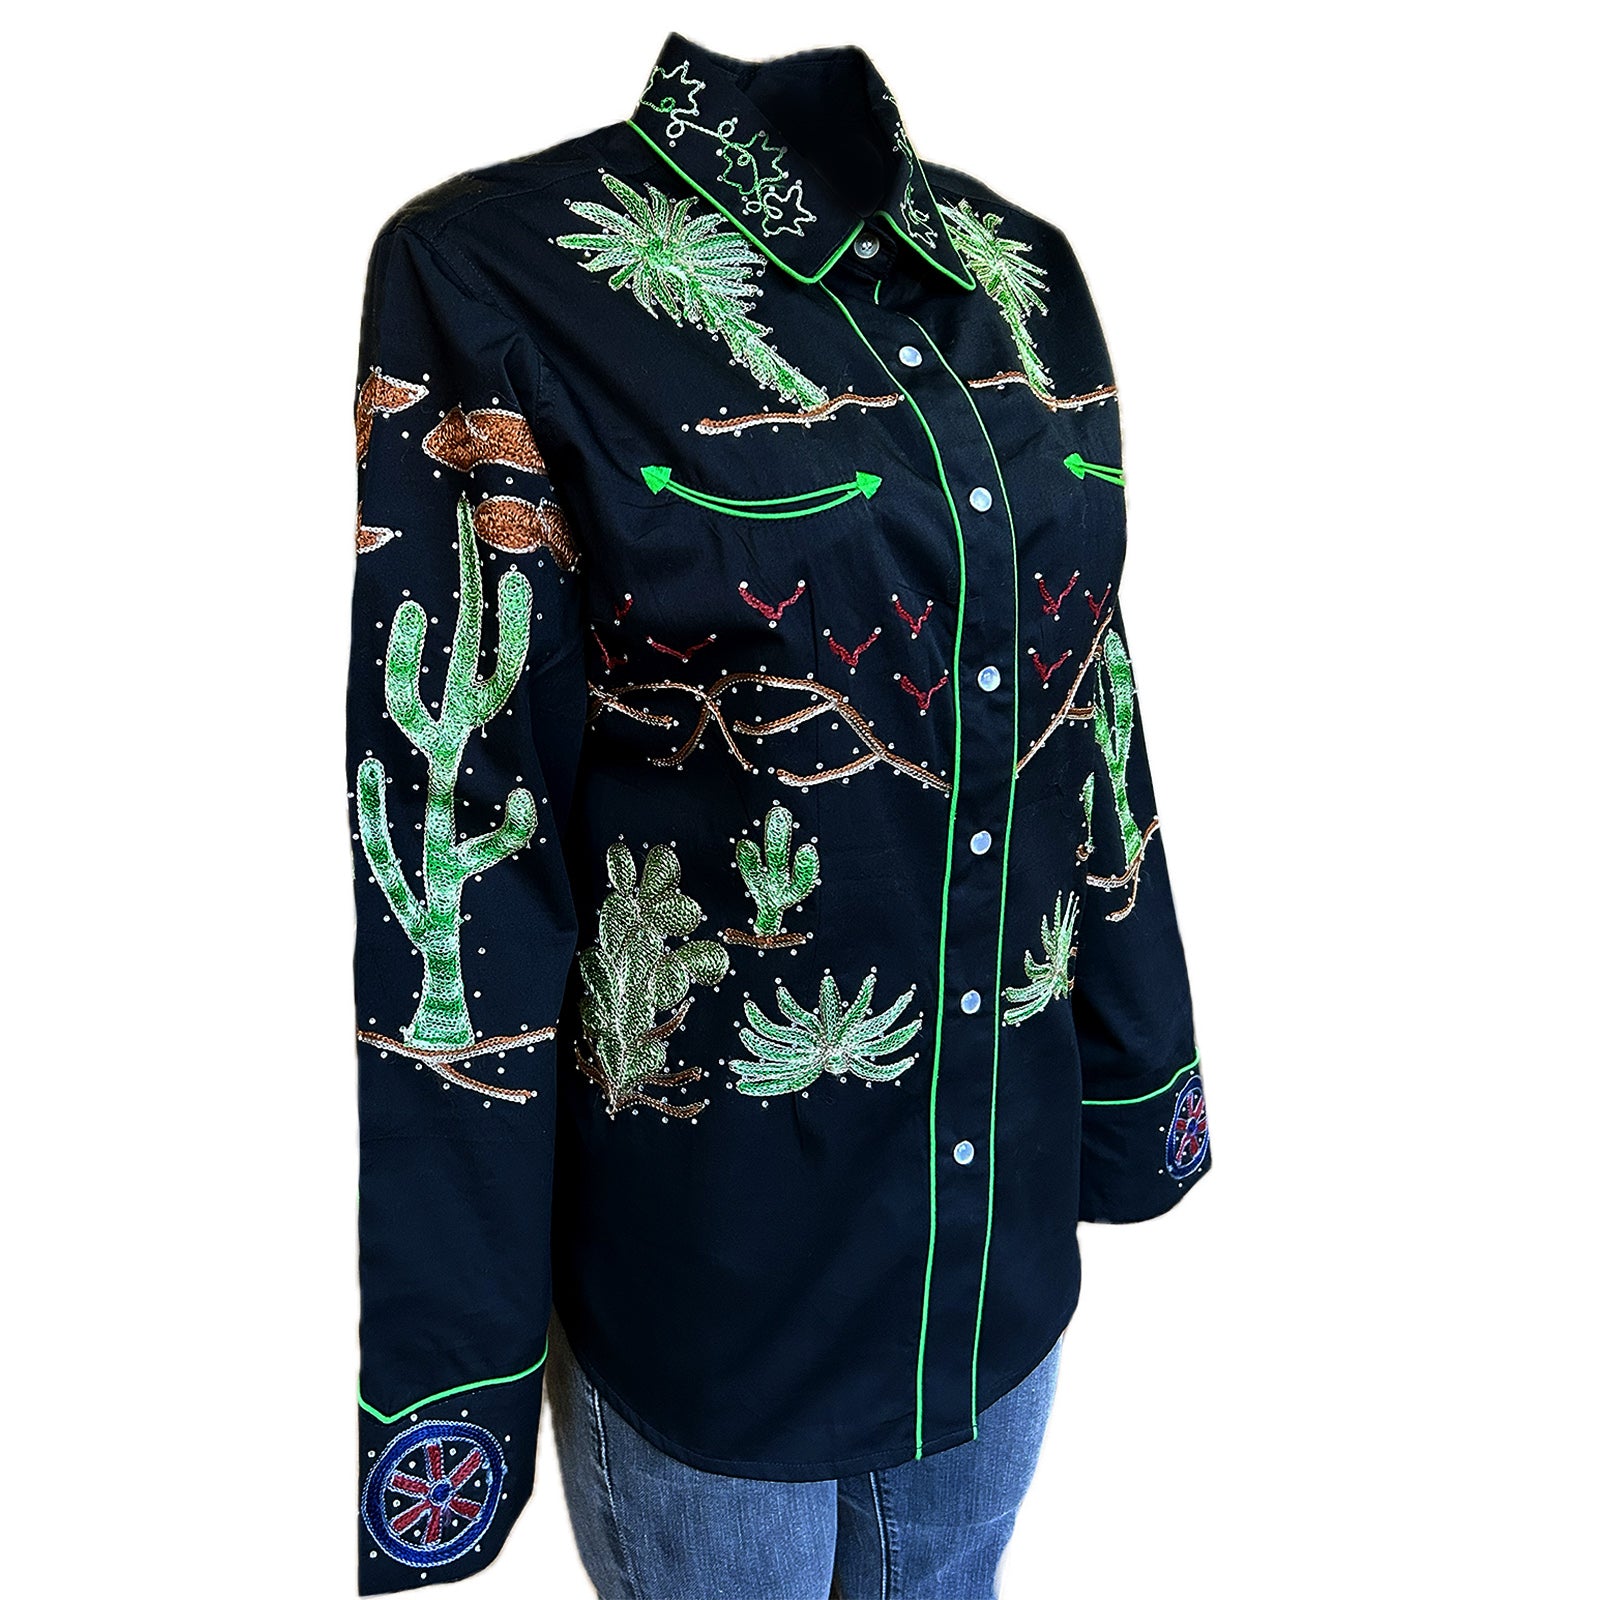 Women's Porter Wagoner Black Embroidered Western Shirt